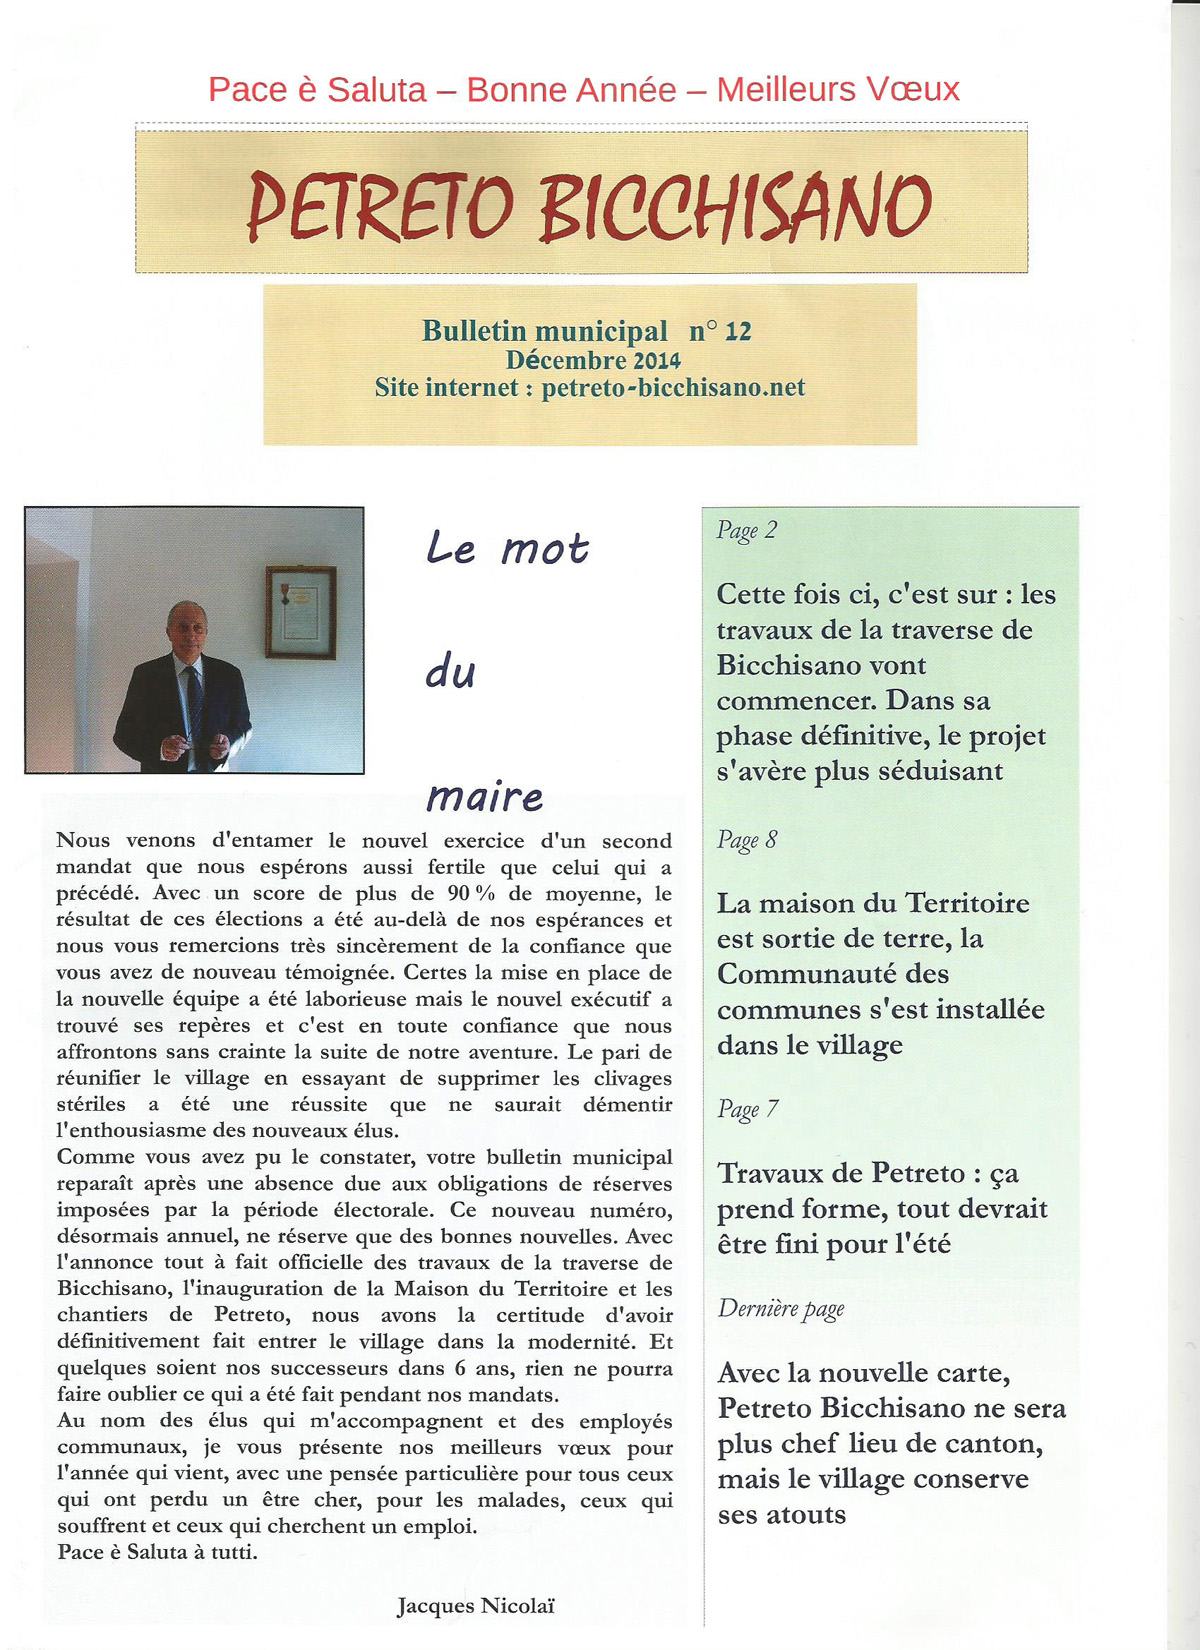 Bulletin municipal N° 14 page 1